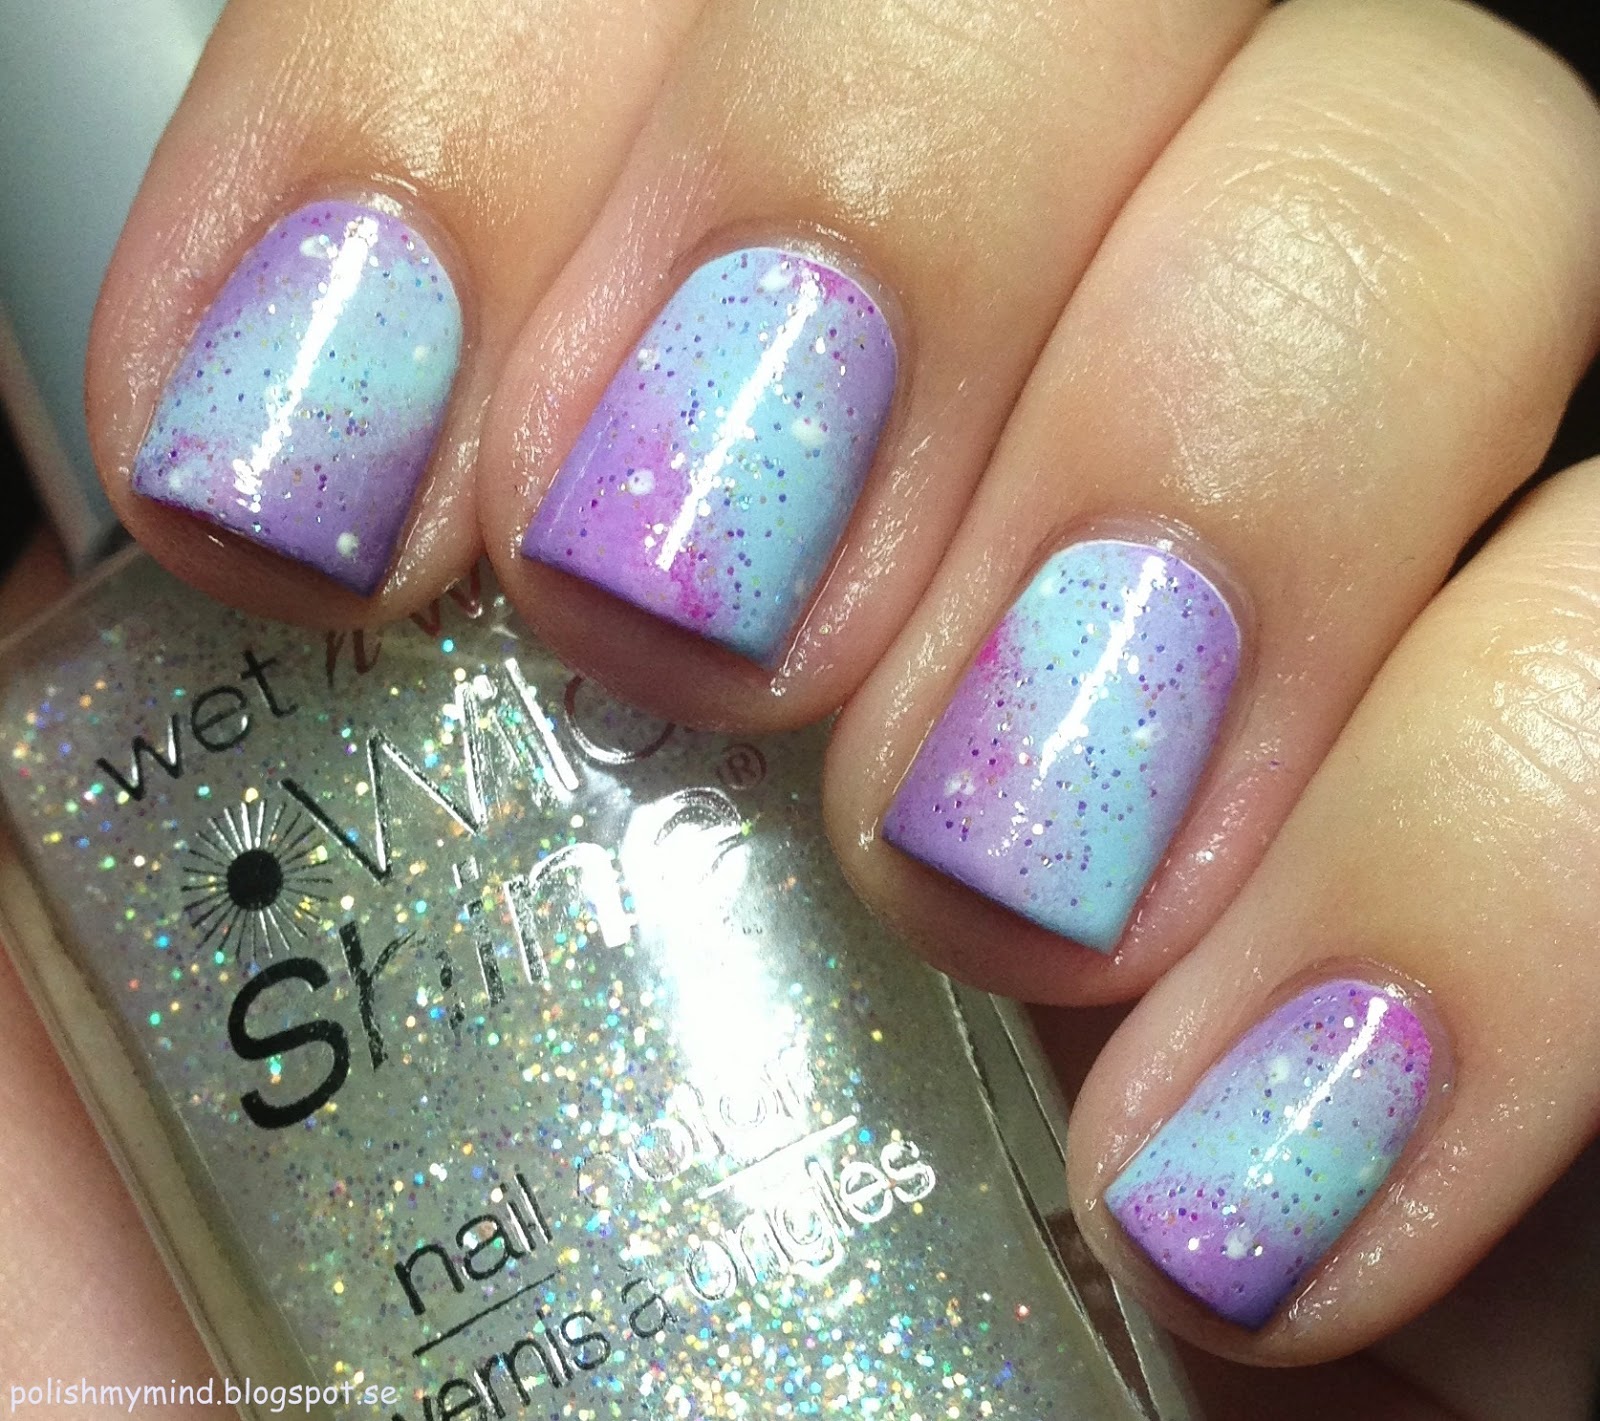 polish my mind: Pastel galaxy nails.